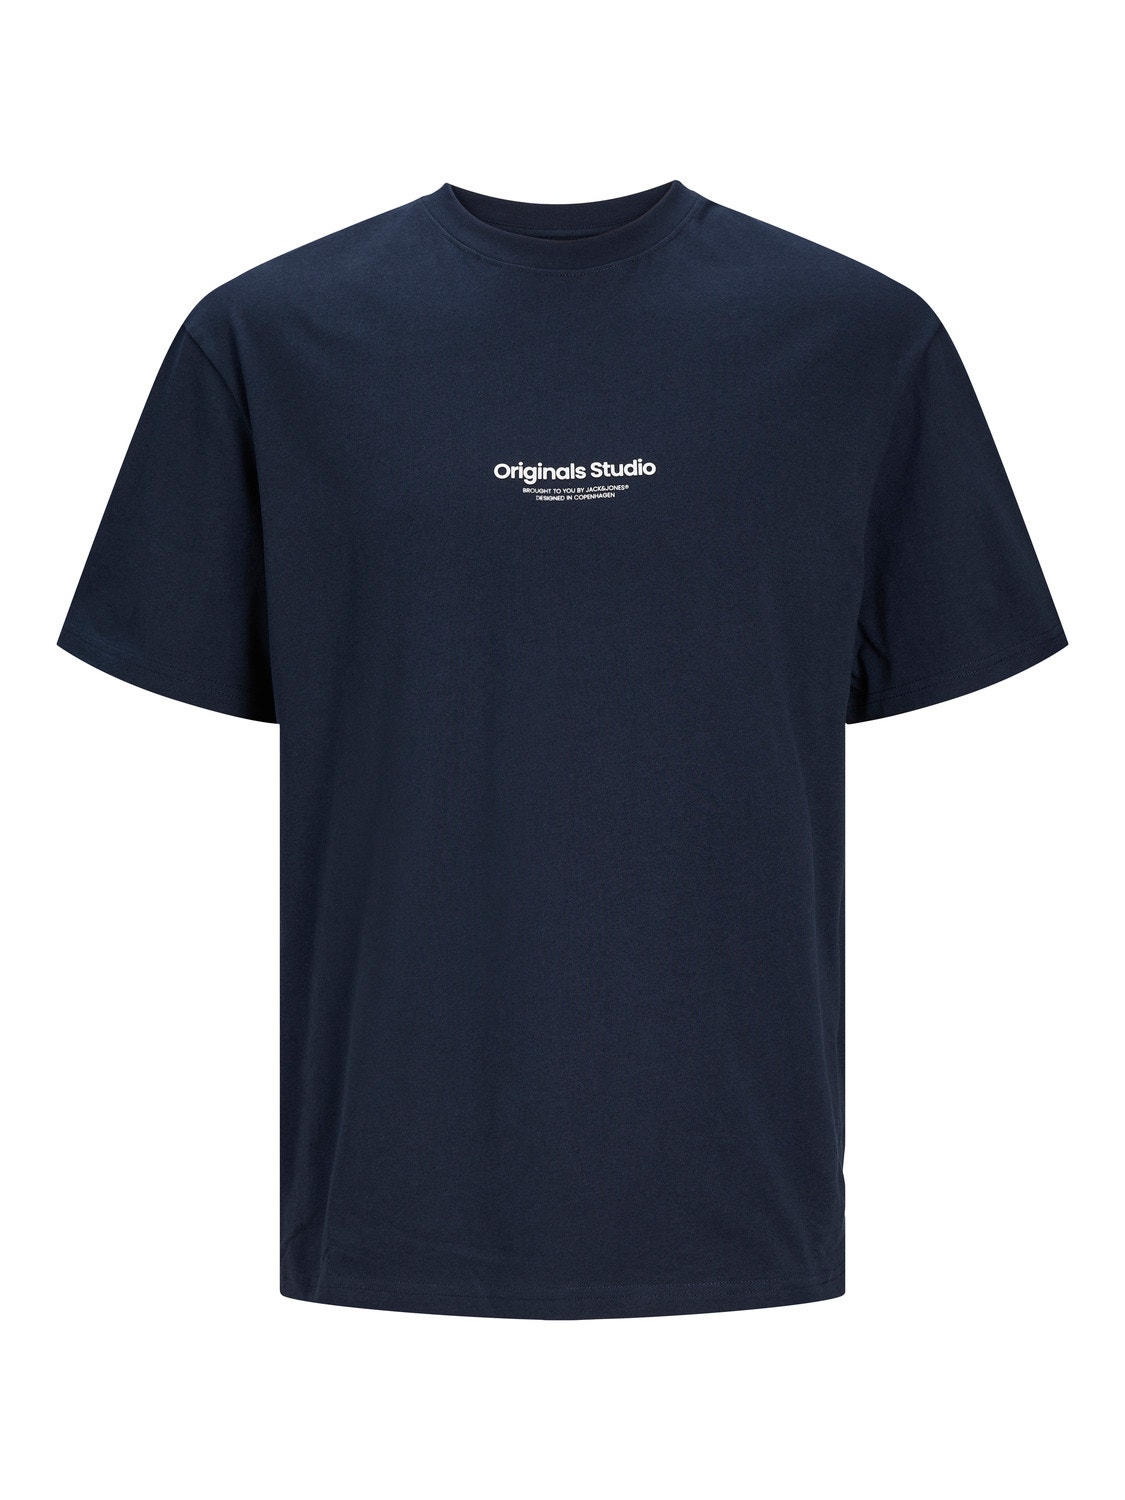 Jack & Jones Plus Size Camiseta Estampado -Sky Captain - 12248177